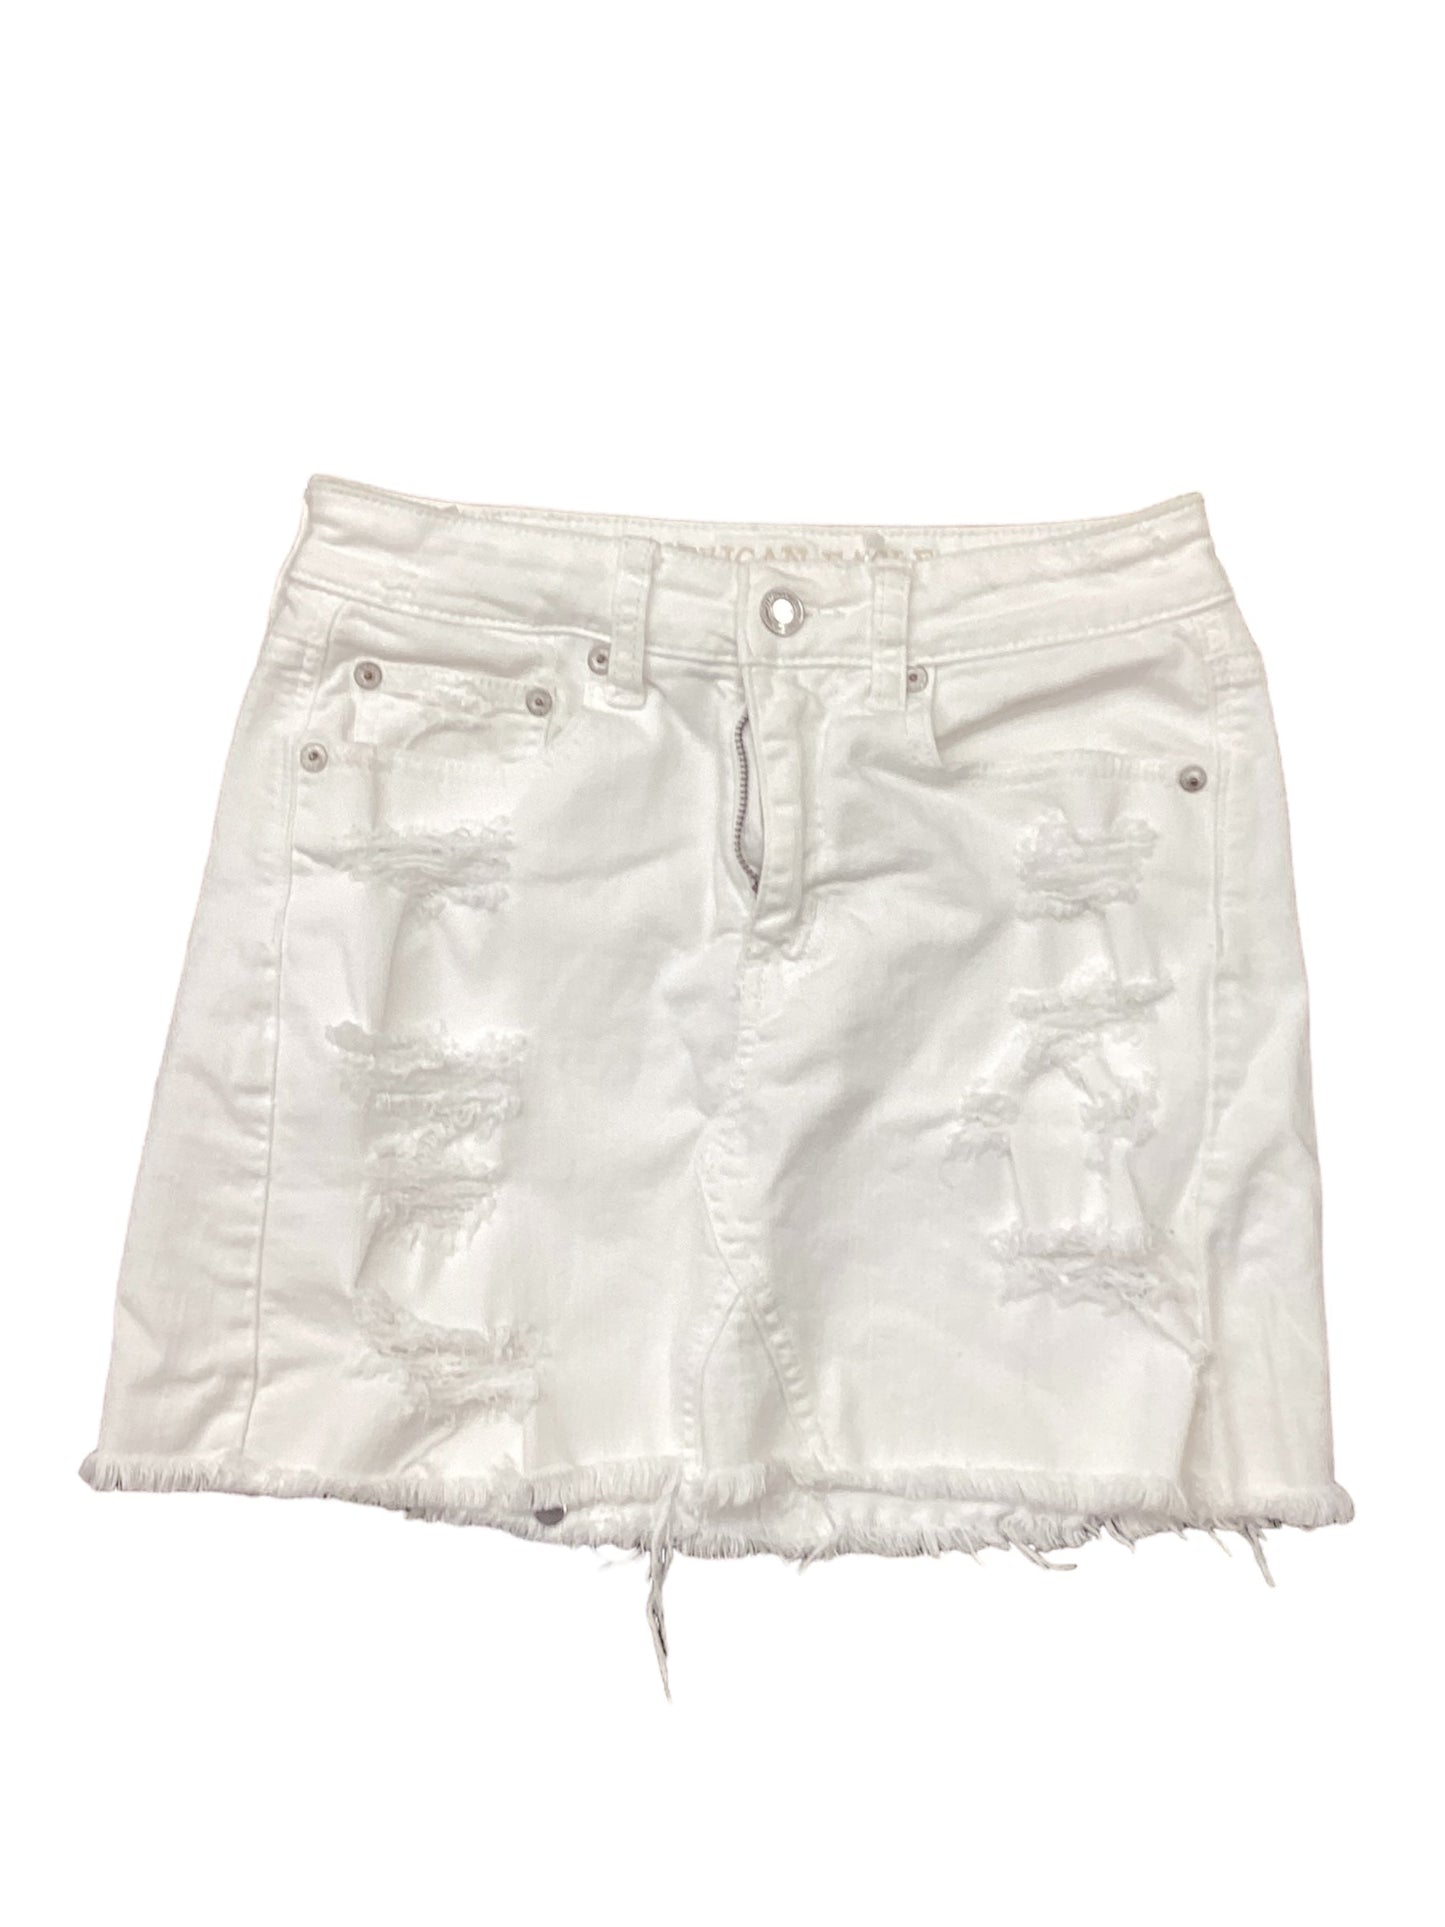 White Skirt Mini & Short American Eagle, Size 8